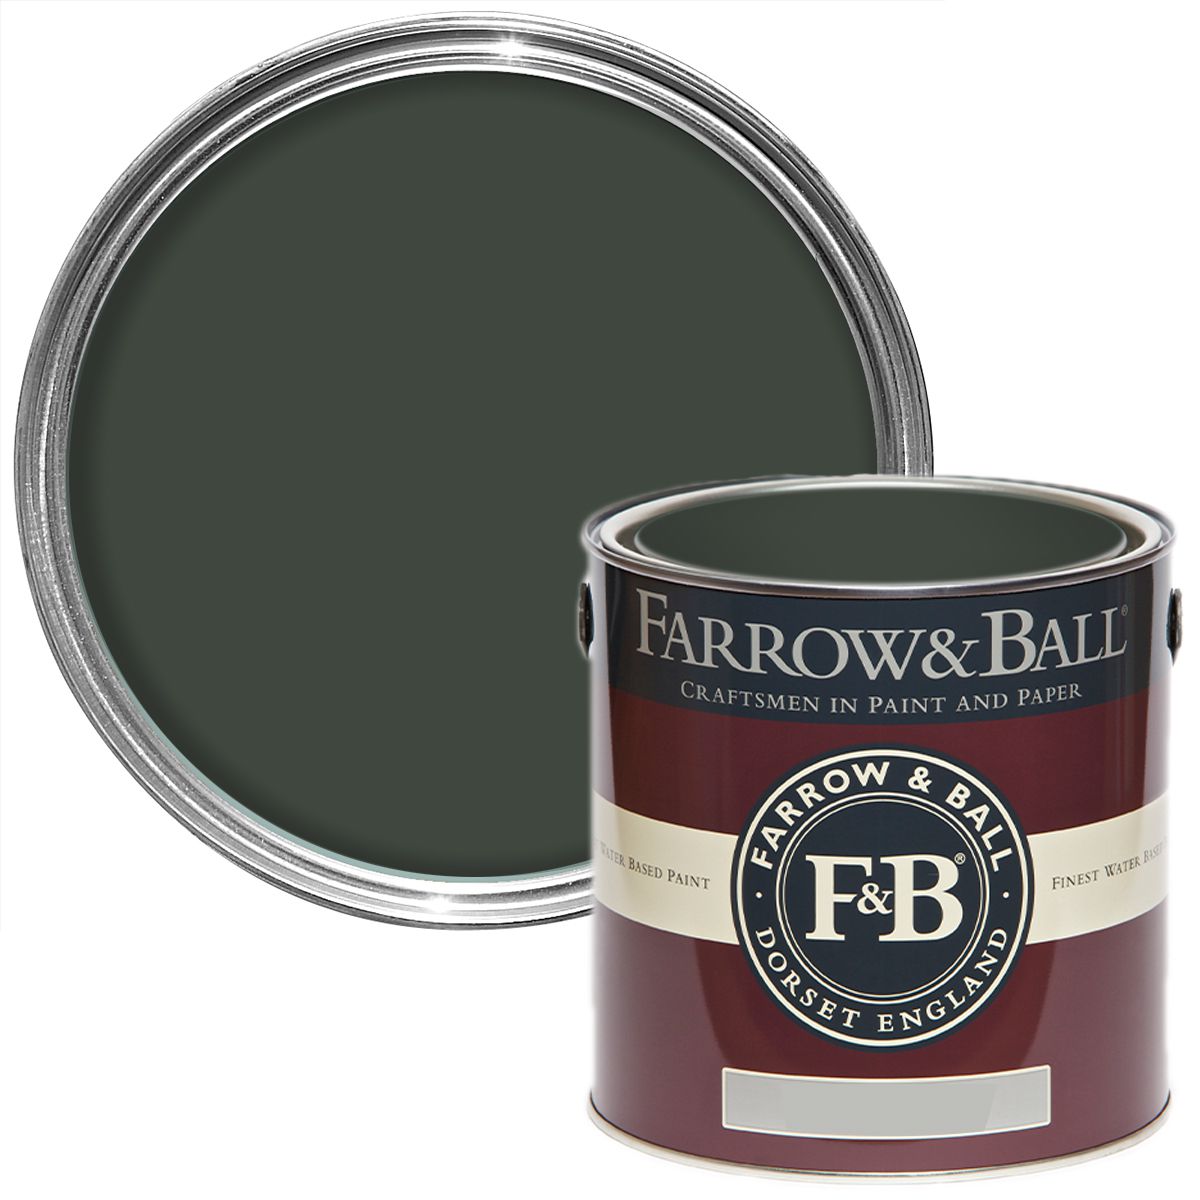 Best Living Room Paint Colors, Studio Green dark forest green paint